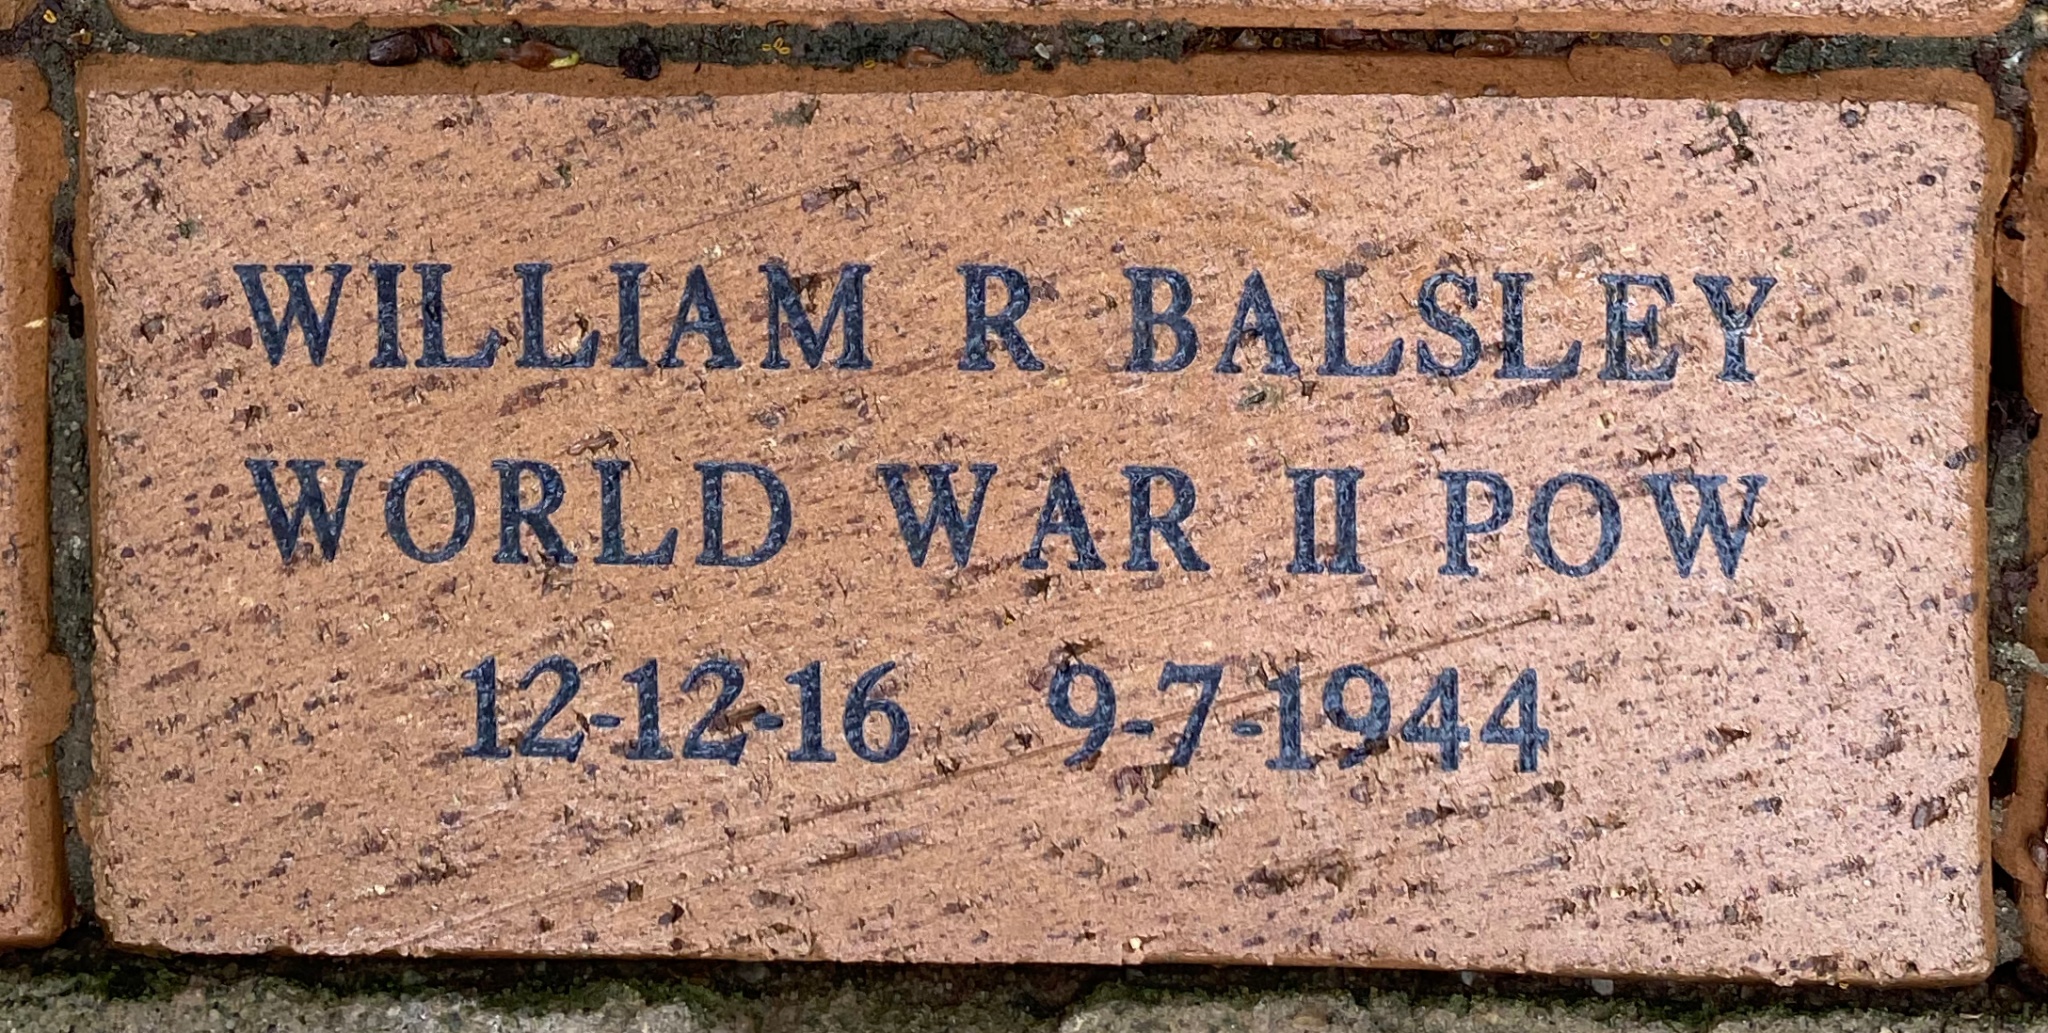 WILLIAM R BALSLEY WORLD WAR II POW 12-12-16   9-7-1944